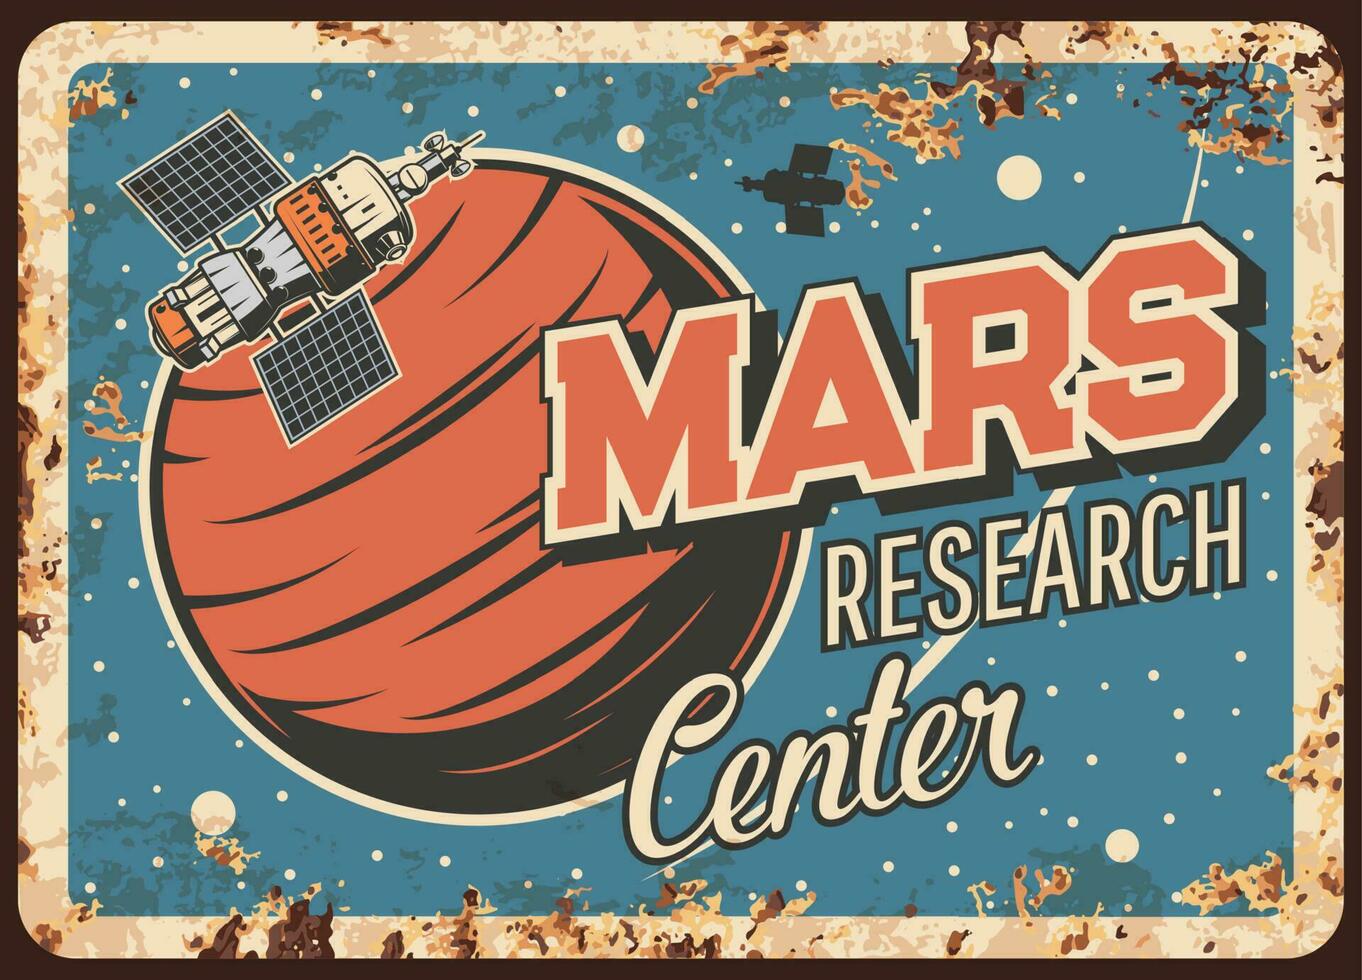 Marte investigación centrar vector oxidado metal plato